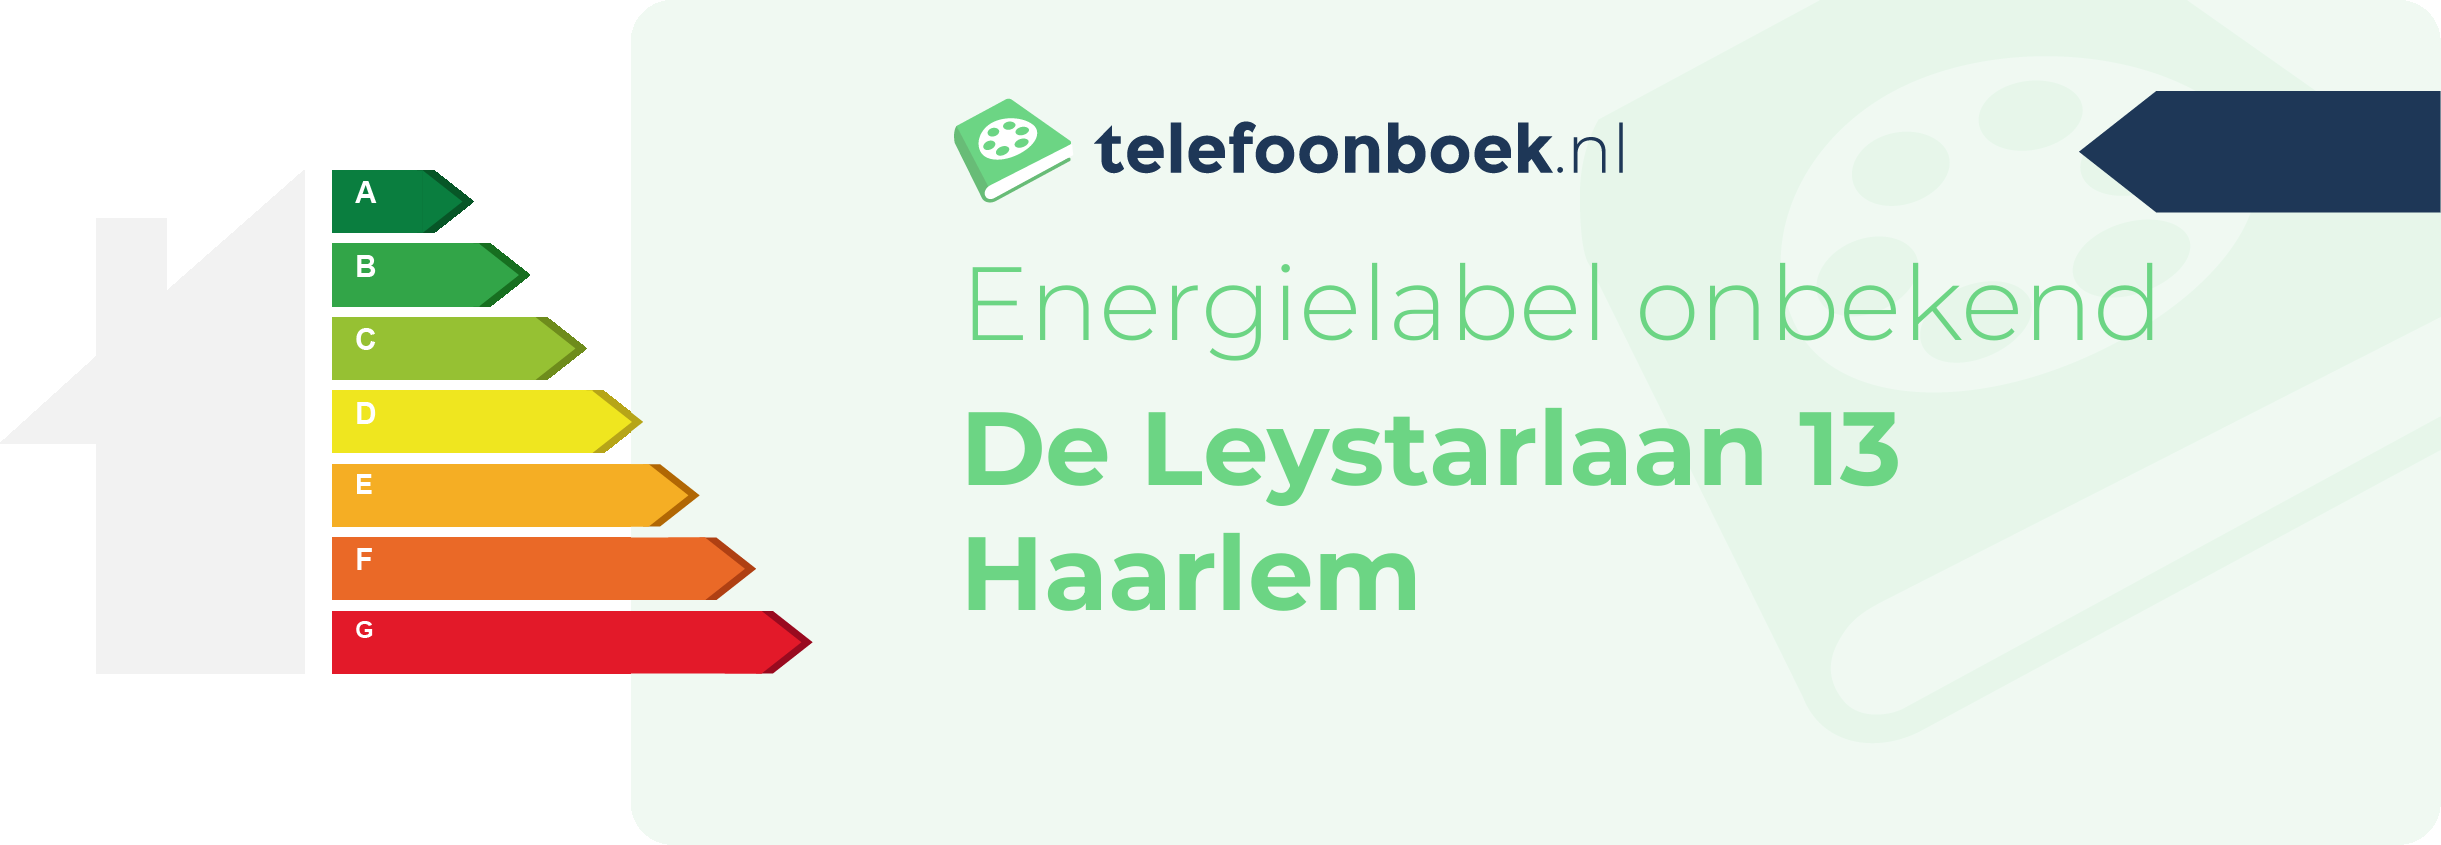 Energielabel De Leystarlaan 13 Haarlem